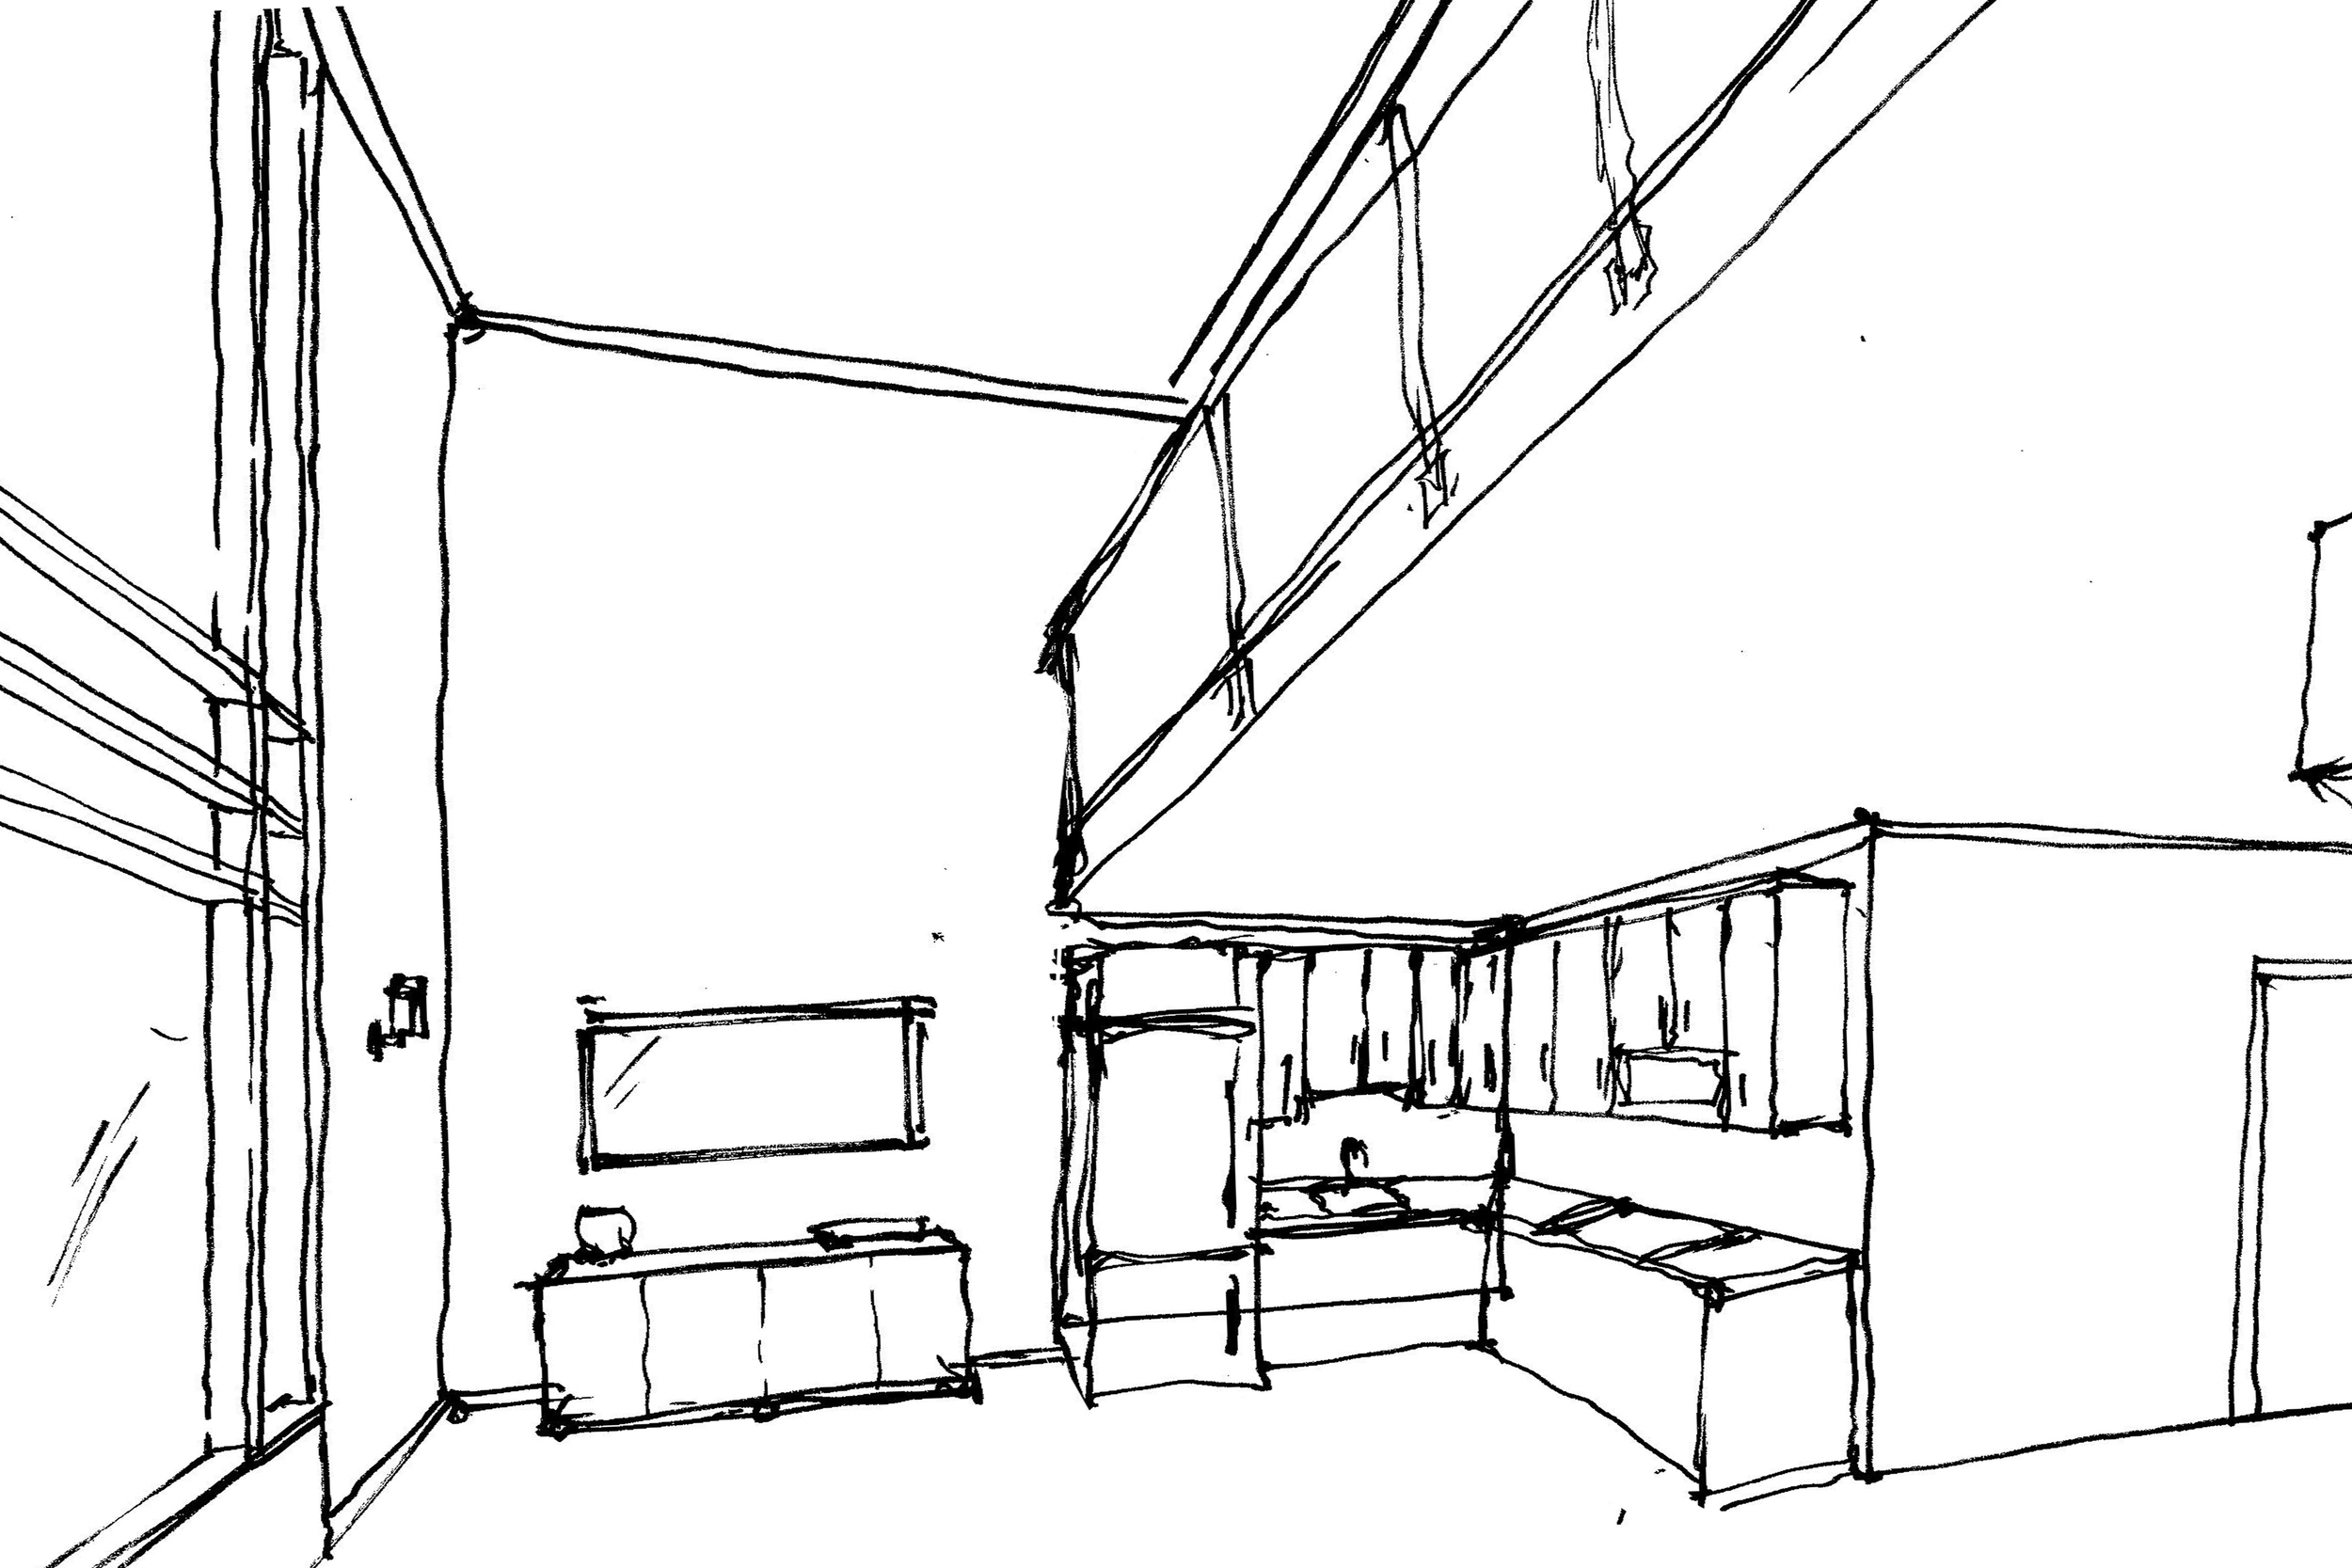 05 - Interior Sketch.jpg